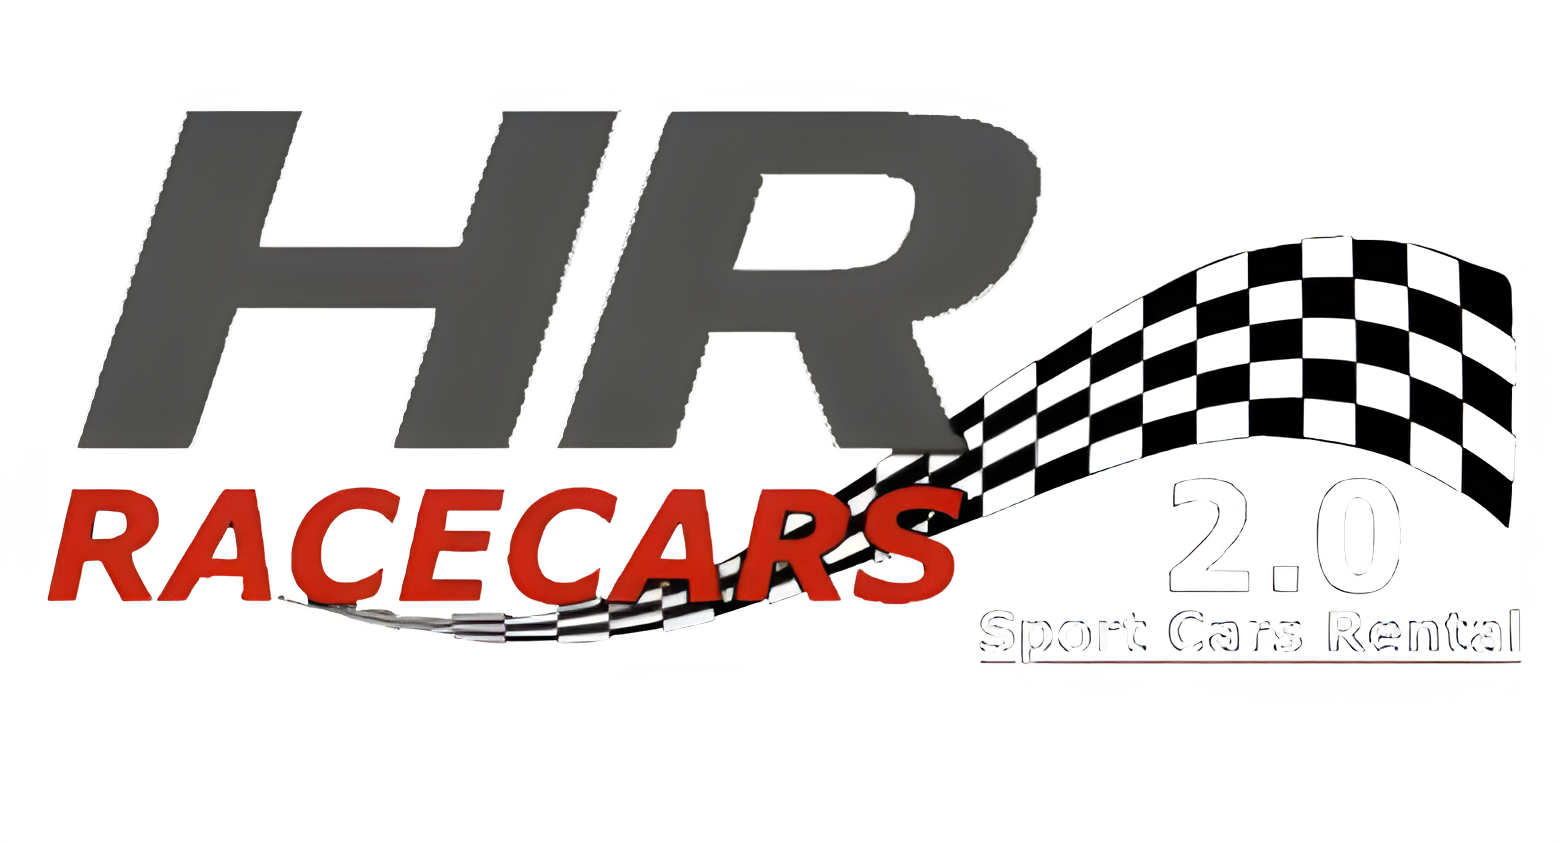 HR Racecars